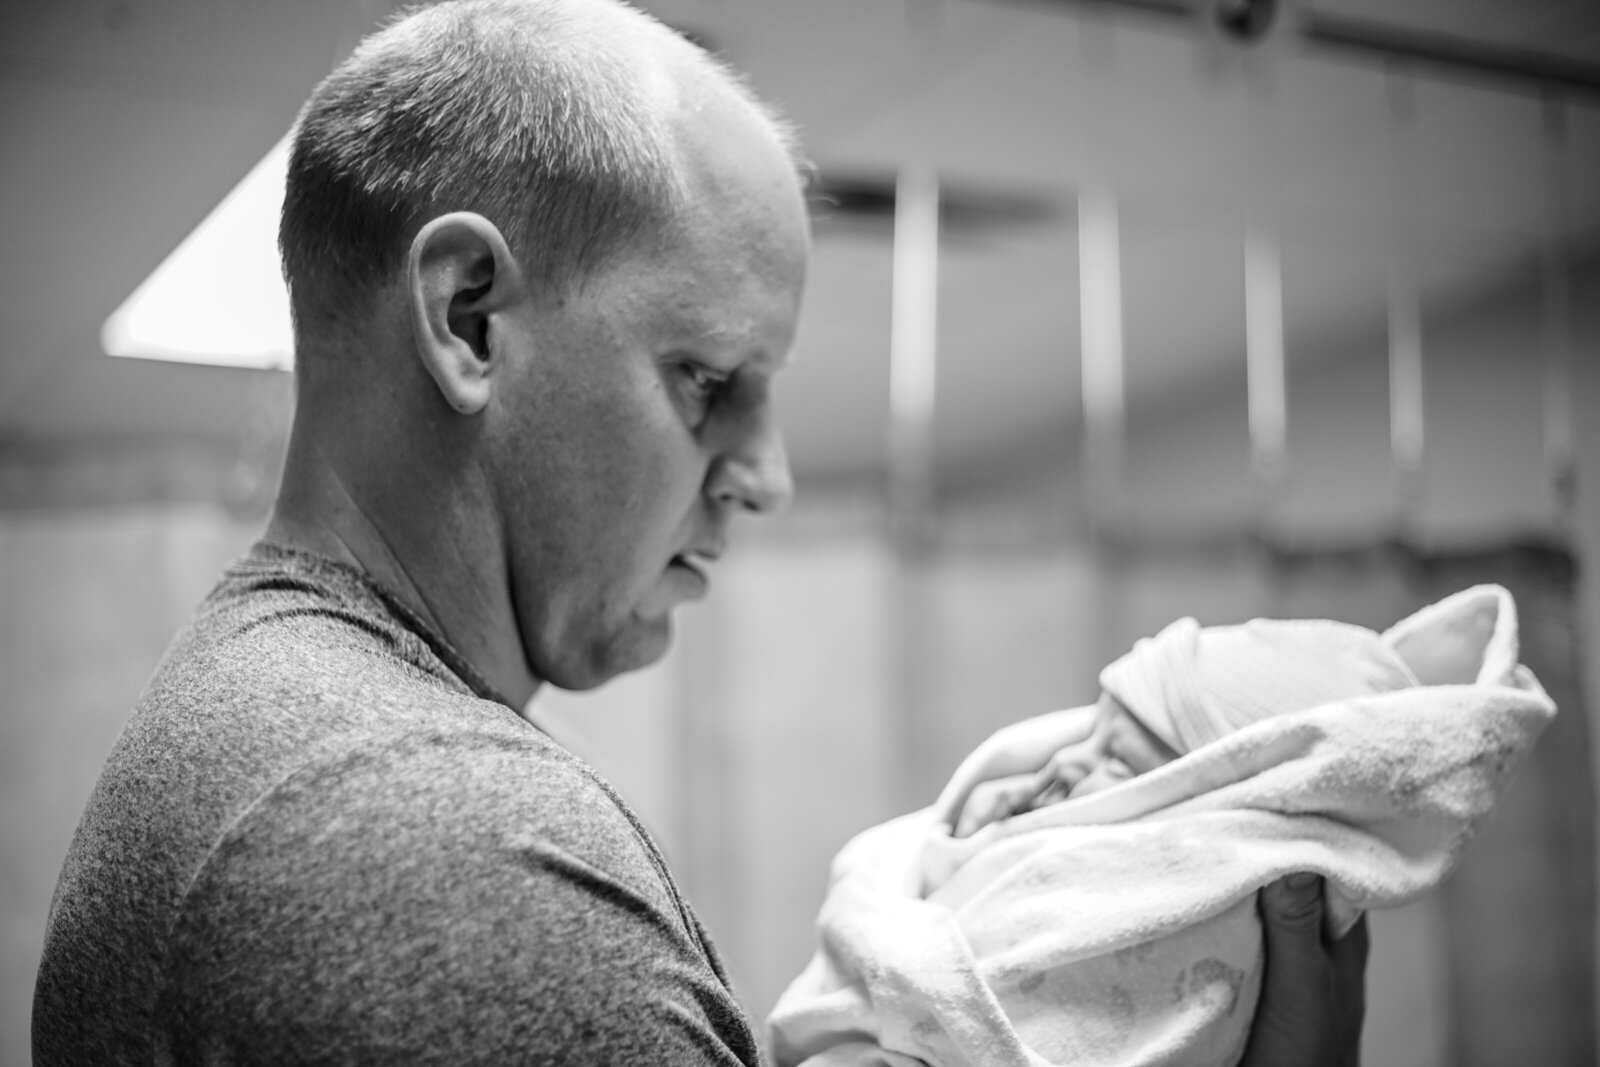 C-section Birth - Oklahoma City Birth Photographer